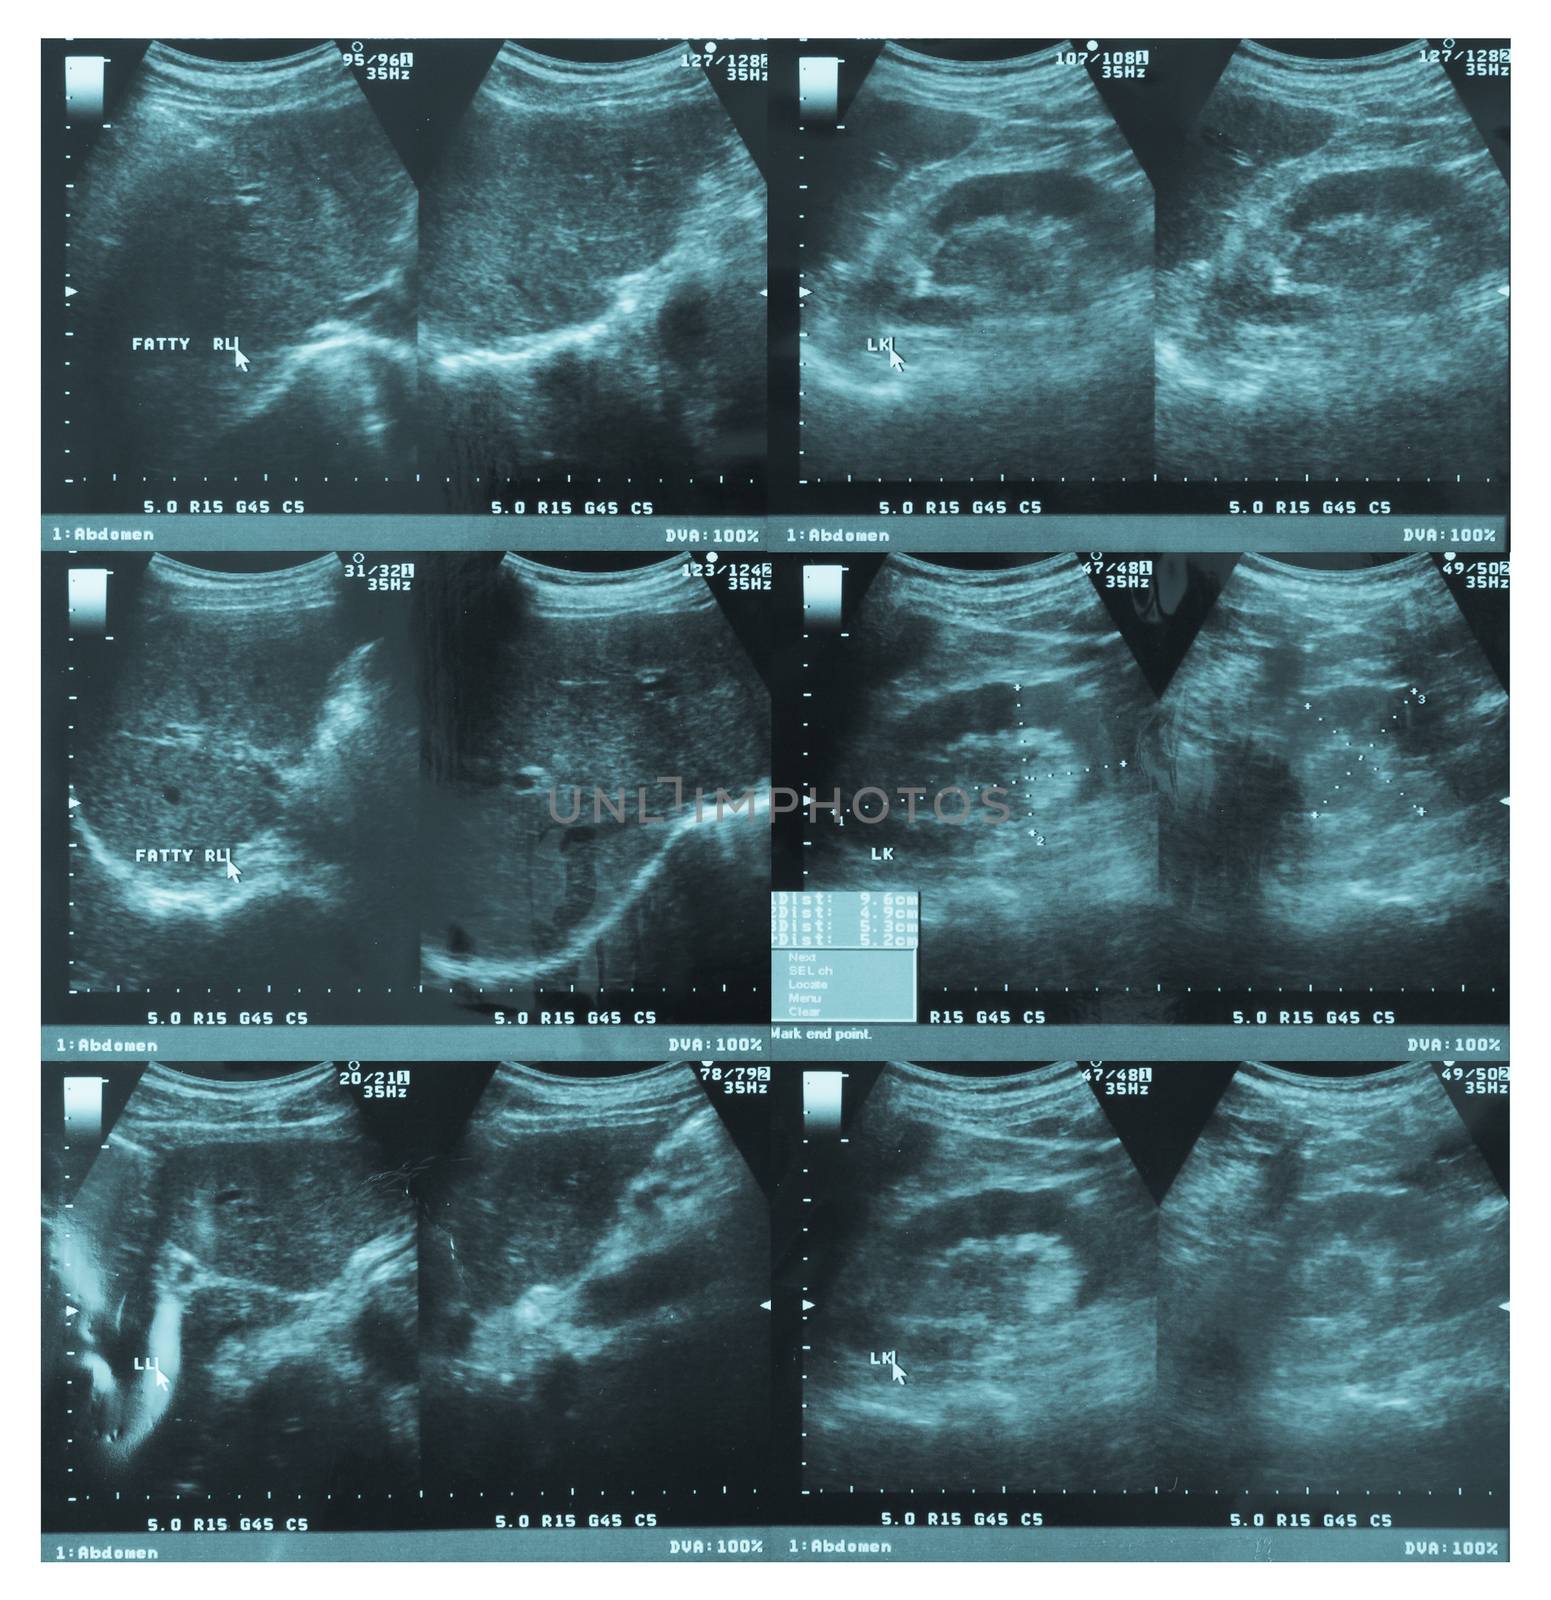 ultrasonography image of abdomen by FrameAngel